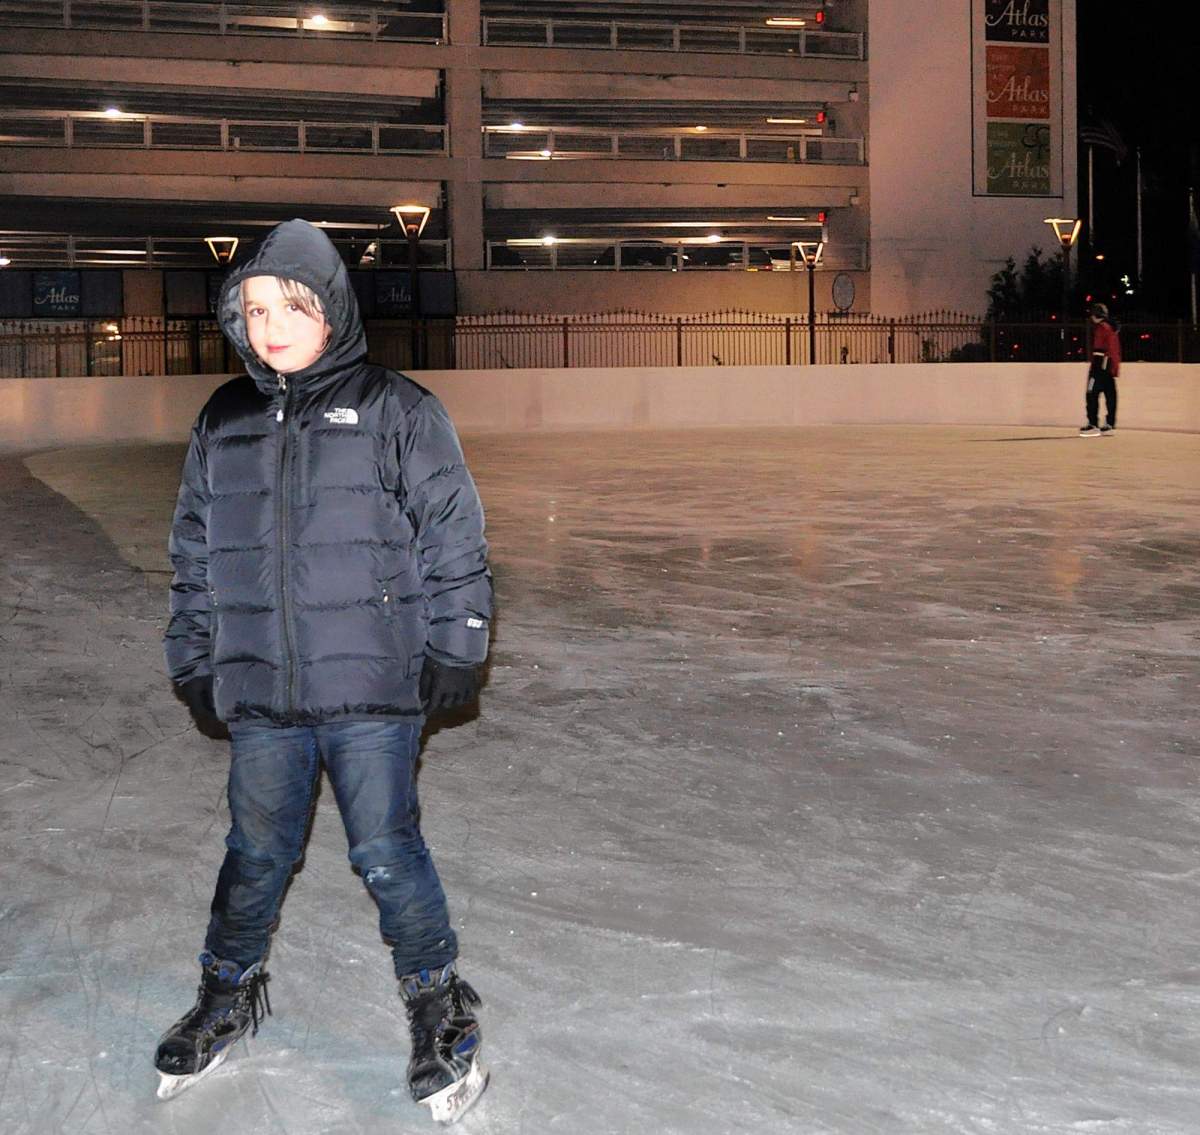 Skating rink makes debut outside Atlas Park